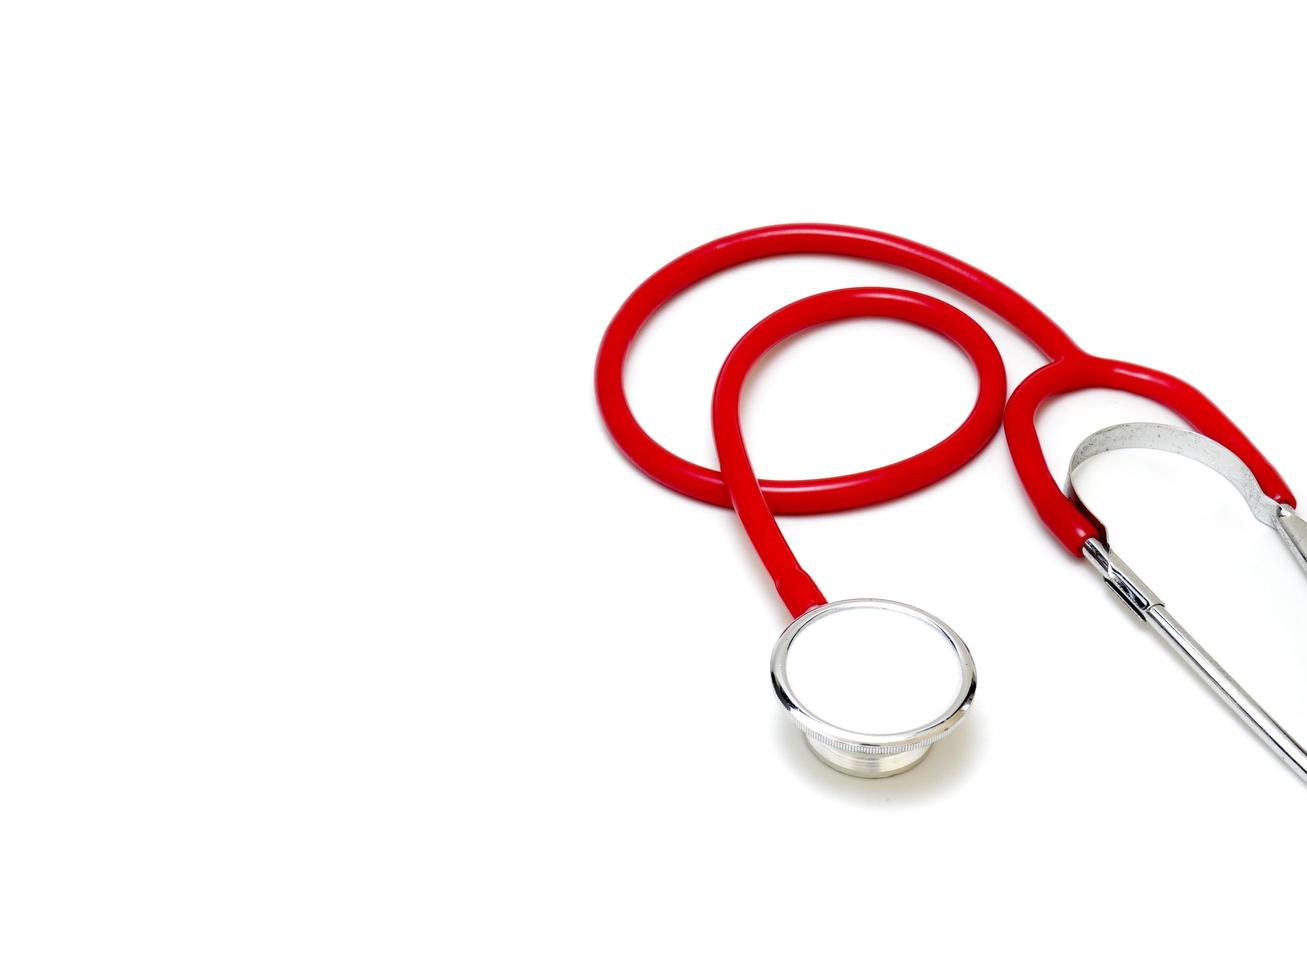 Standard medical stethoscope isolated on a white background photo